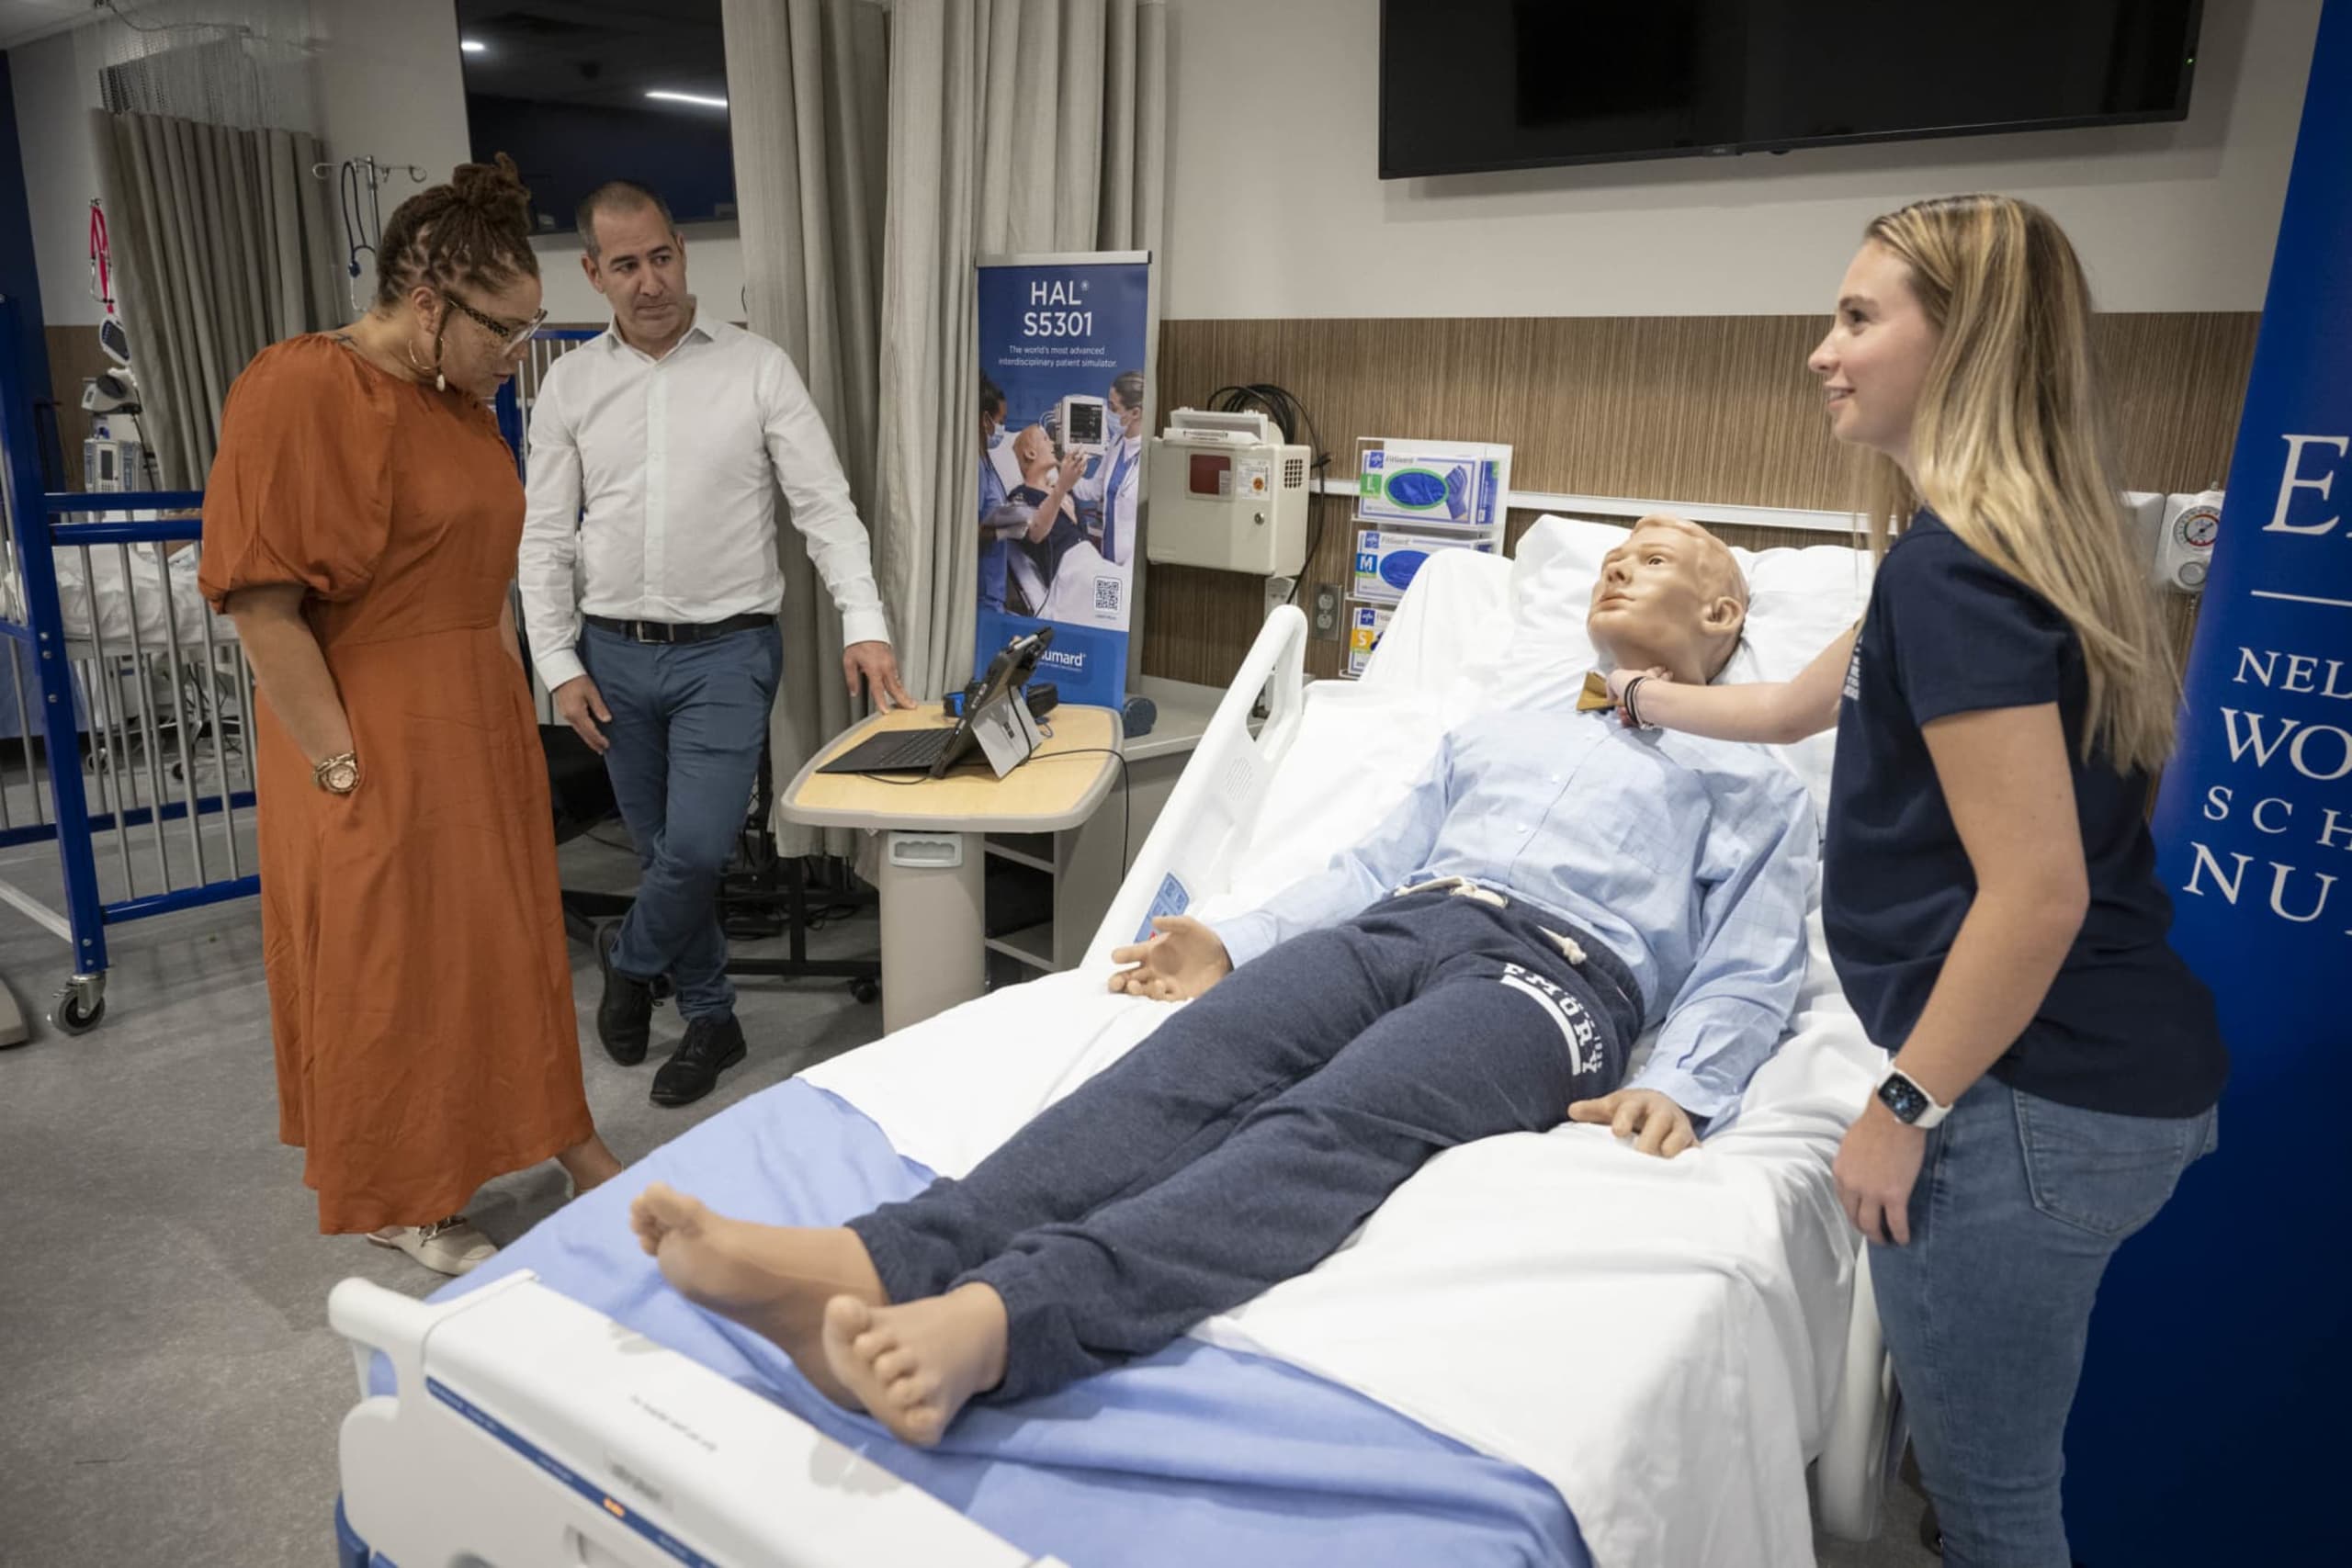 Three people examining Emory HAL patient simulator